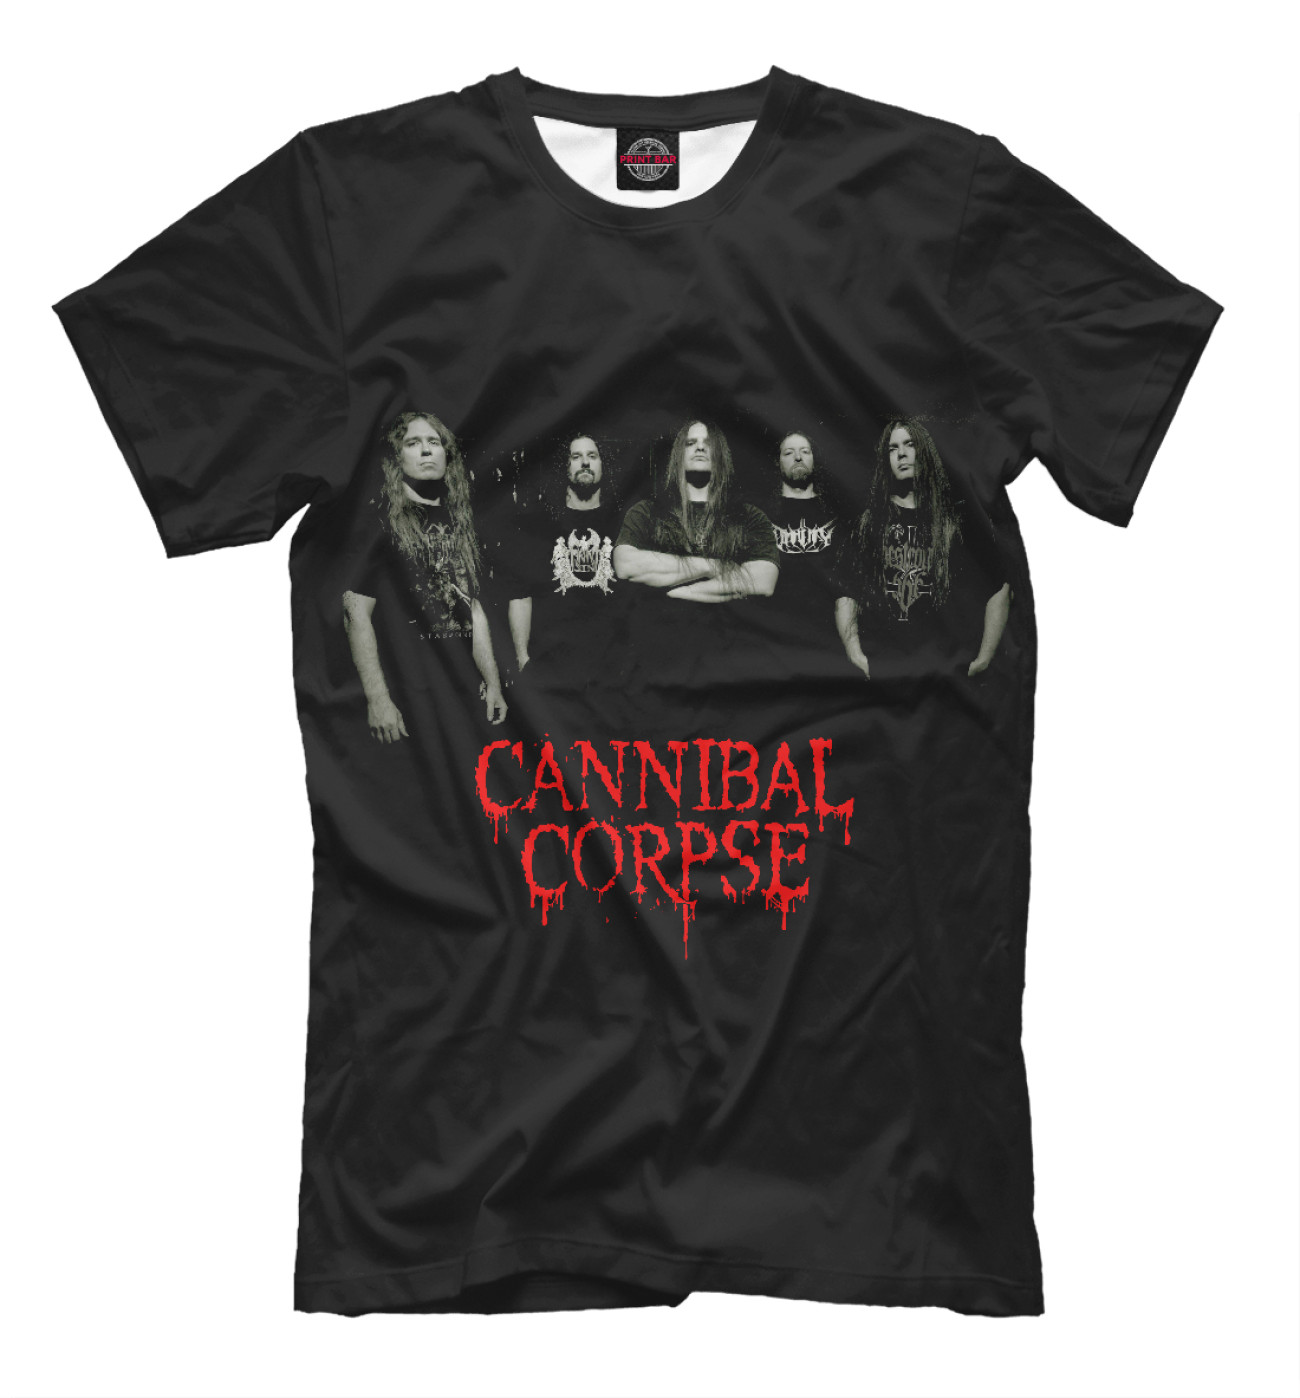 Мужская Футболка Cannibal Corpse, артикул: CCR-743518-fut-2